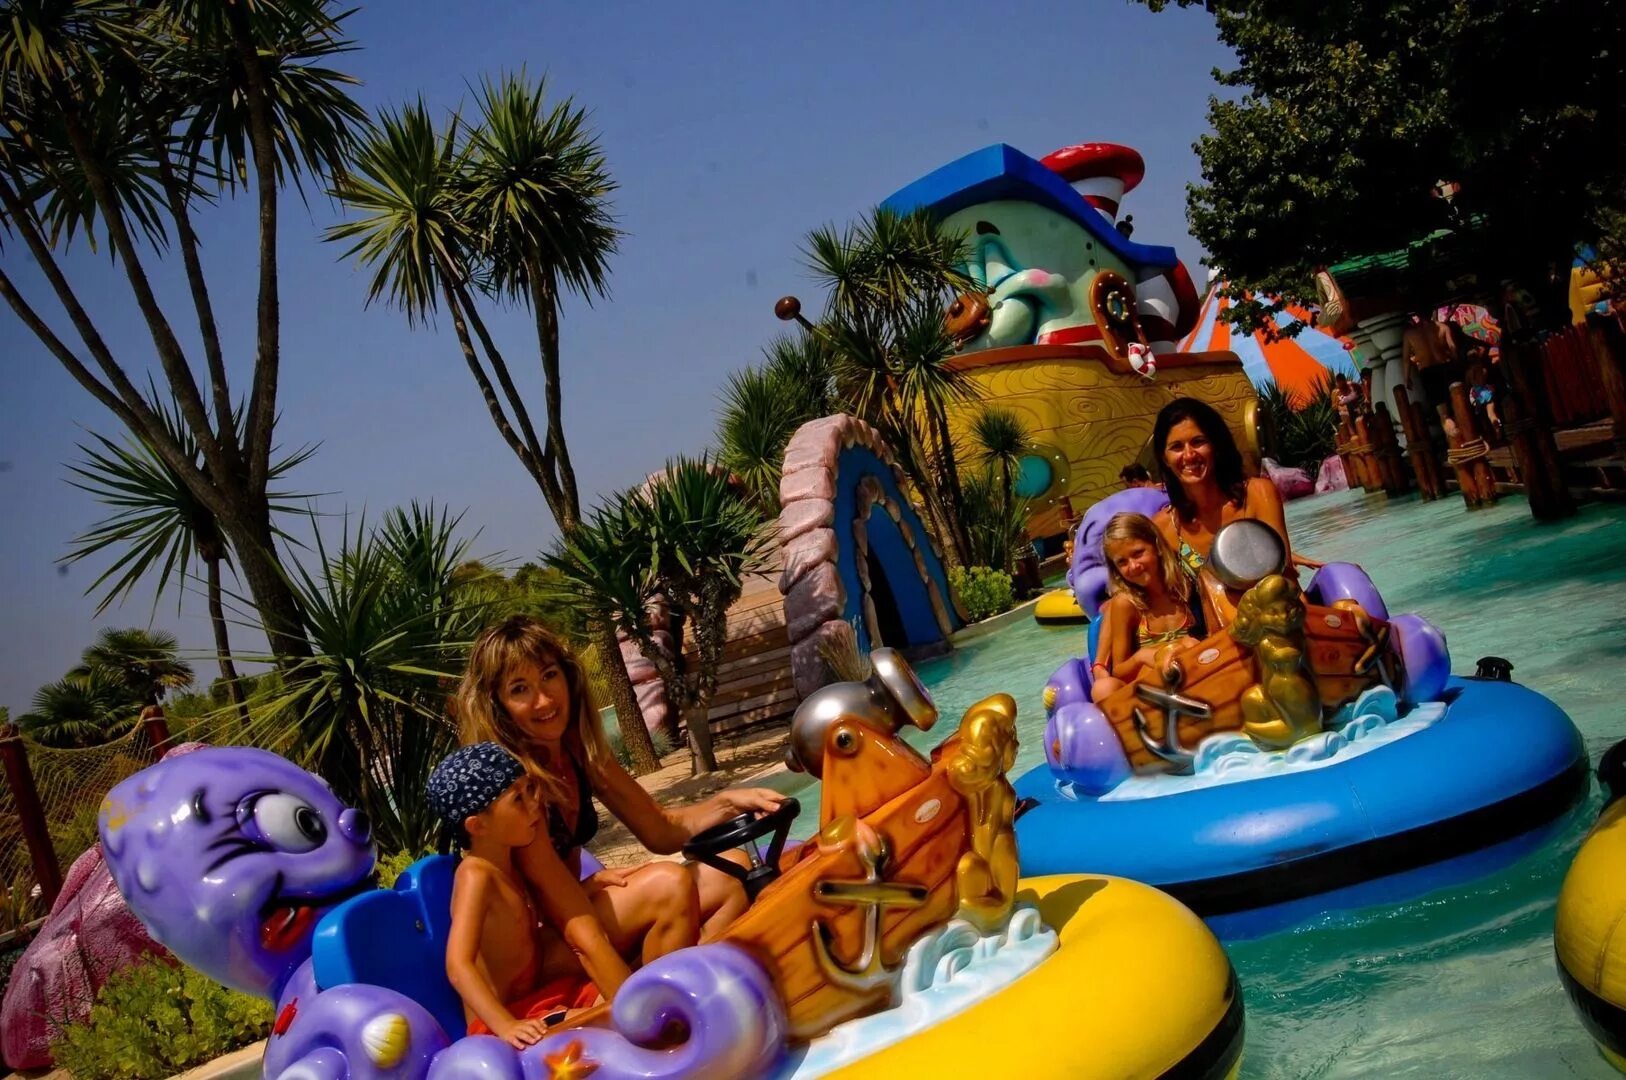 Развлечения в отеле. Лидо ди Езоло аквапарк Акваландия. Развлечения для детей. Развлечения в отелях. Италия развлечения для детей.